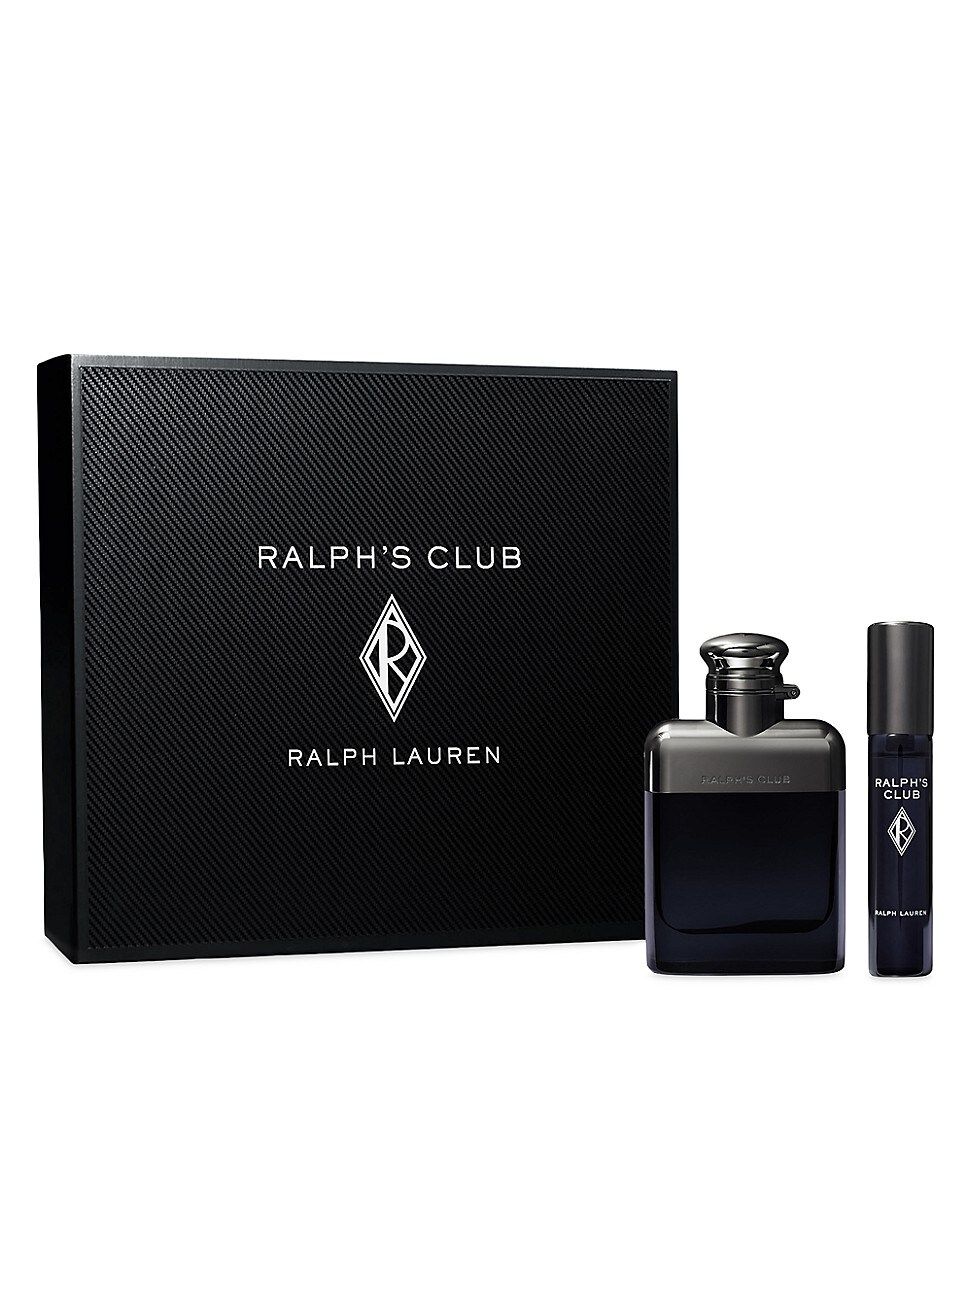 Ralph's Club Eau de Parfum 2-Piece Set | Saks Fifth Avenue